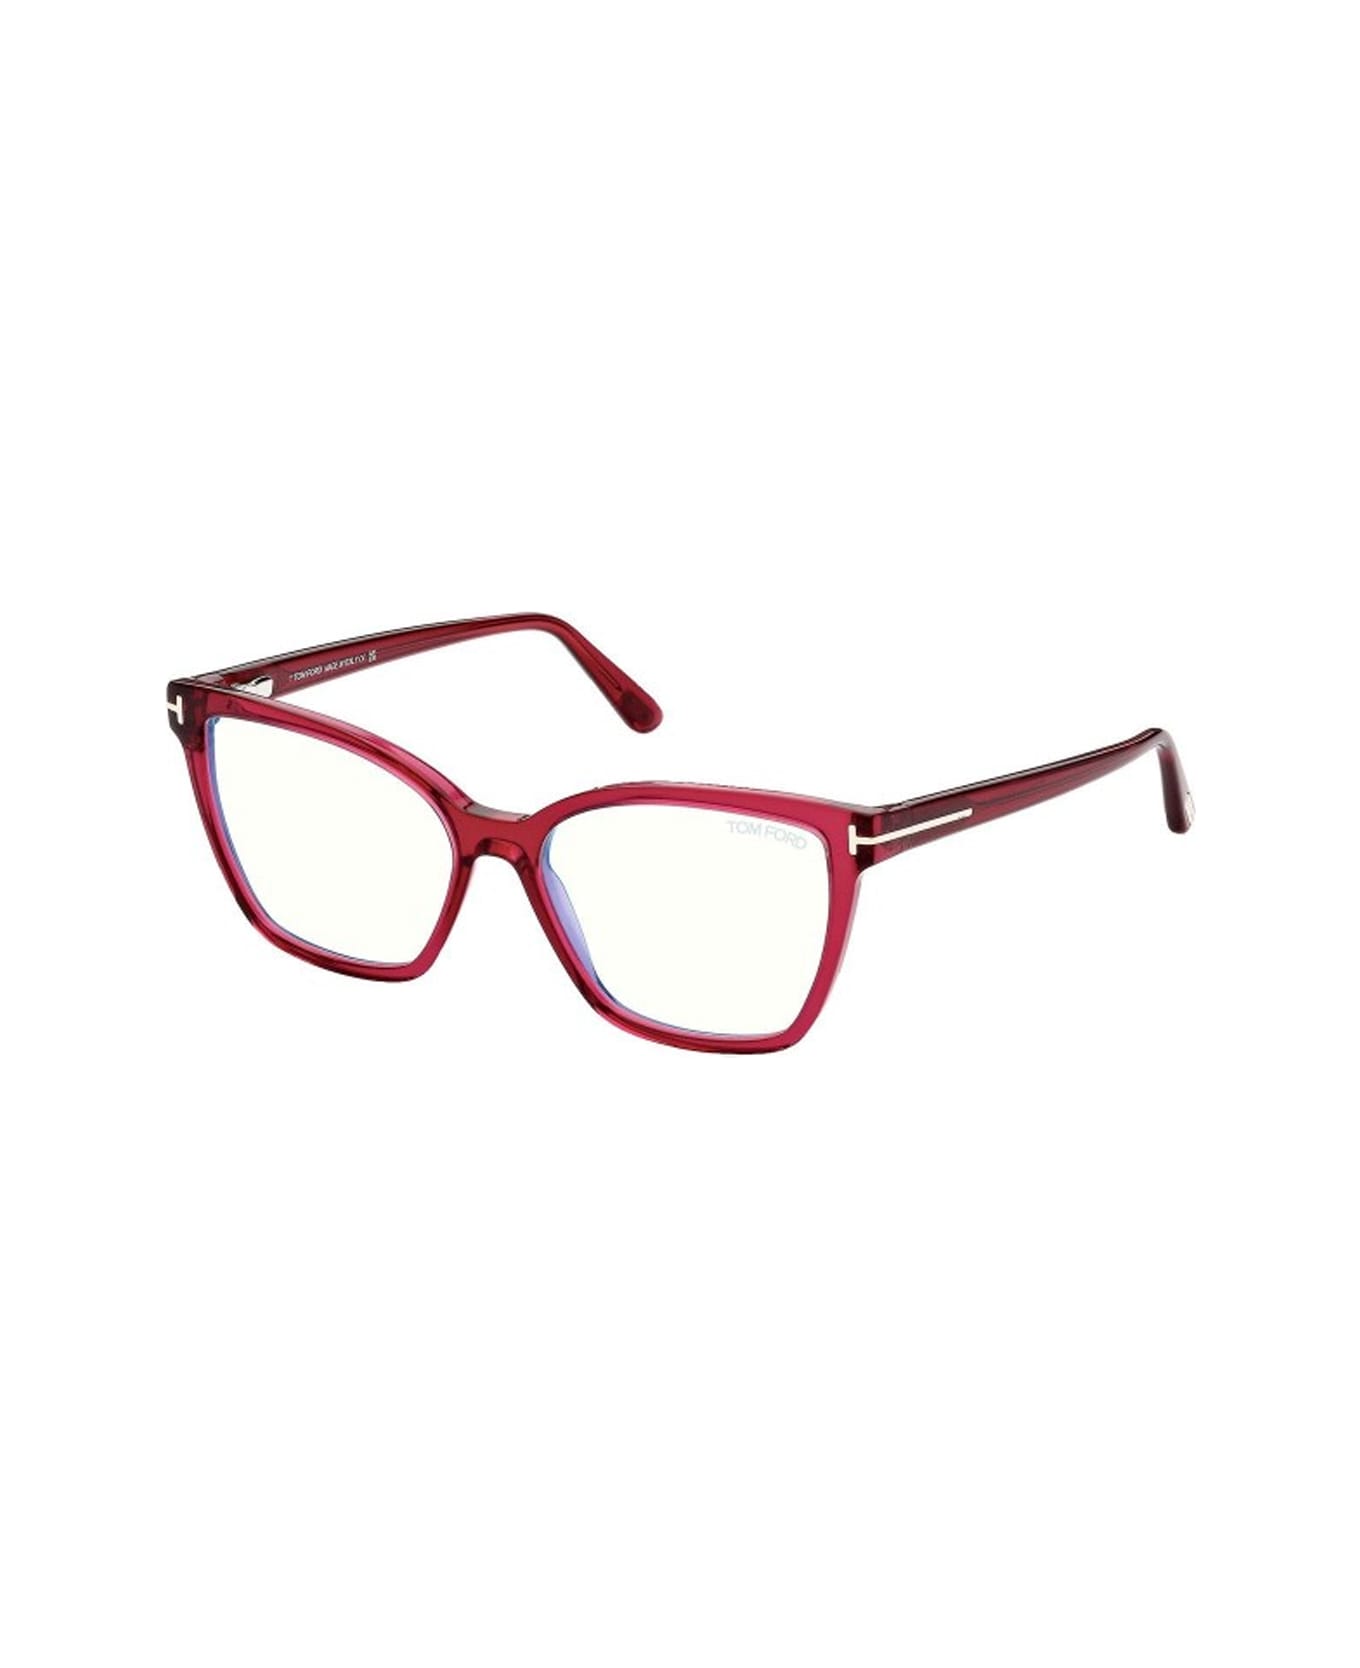 Tom Ford Eyewear Ft5812 074 Glasses - Rosa アイウェア